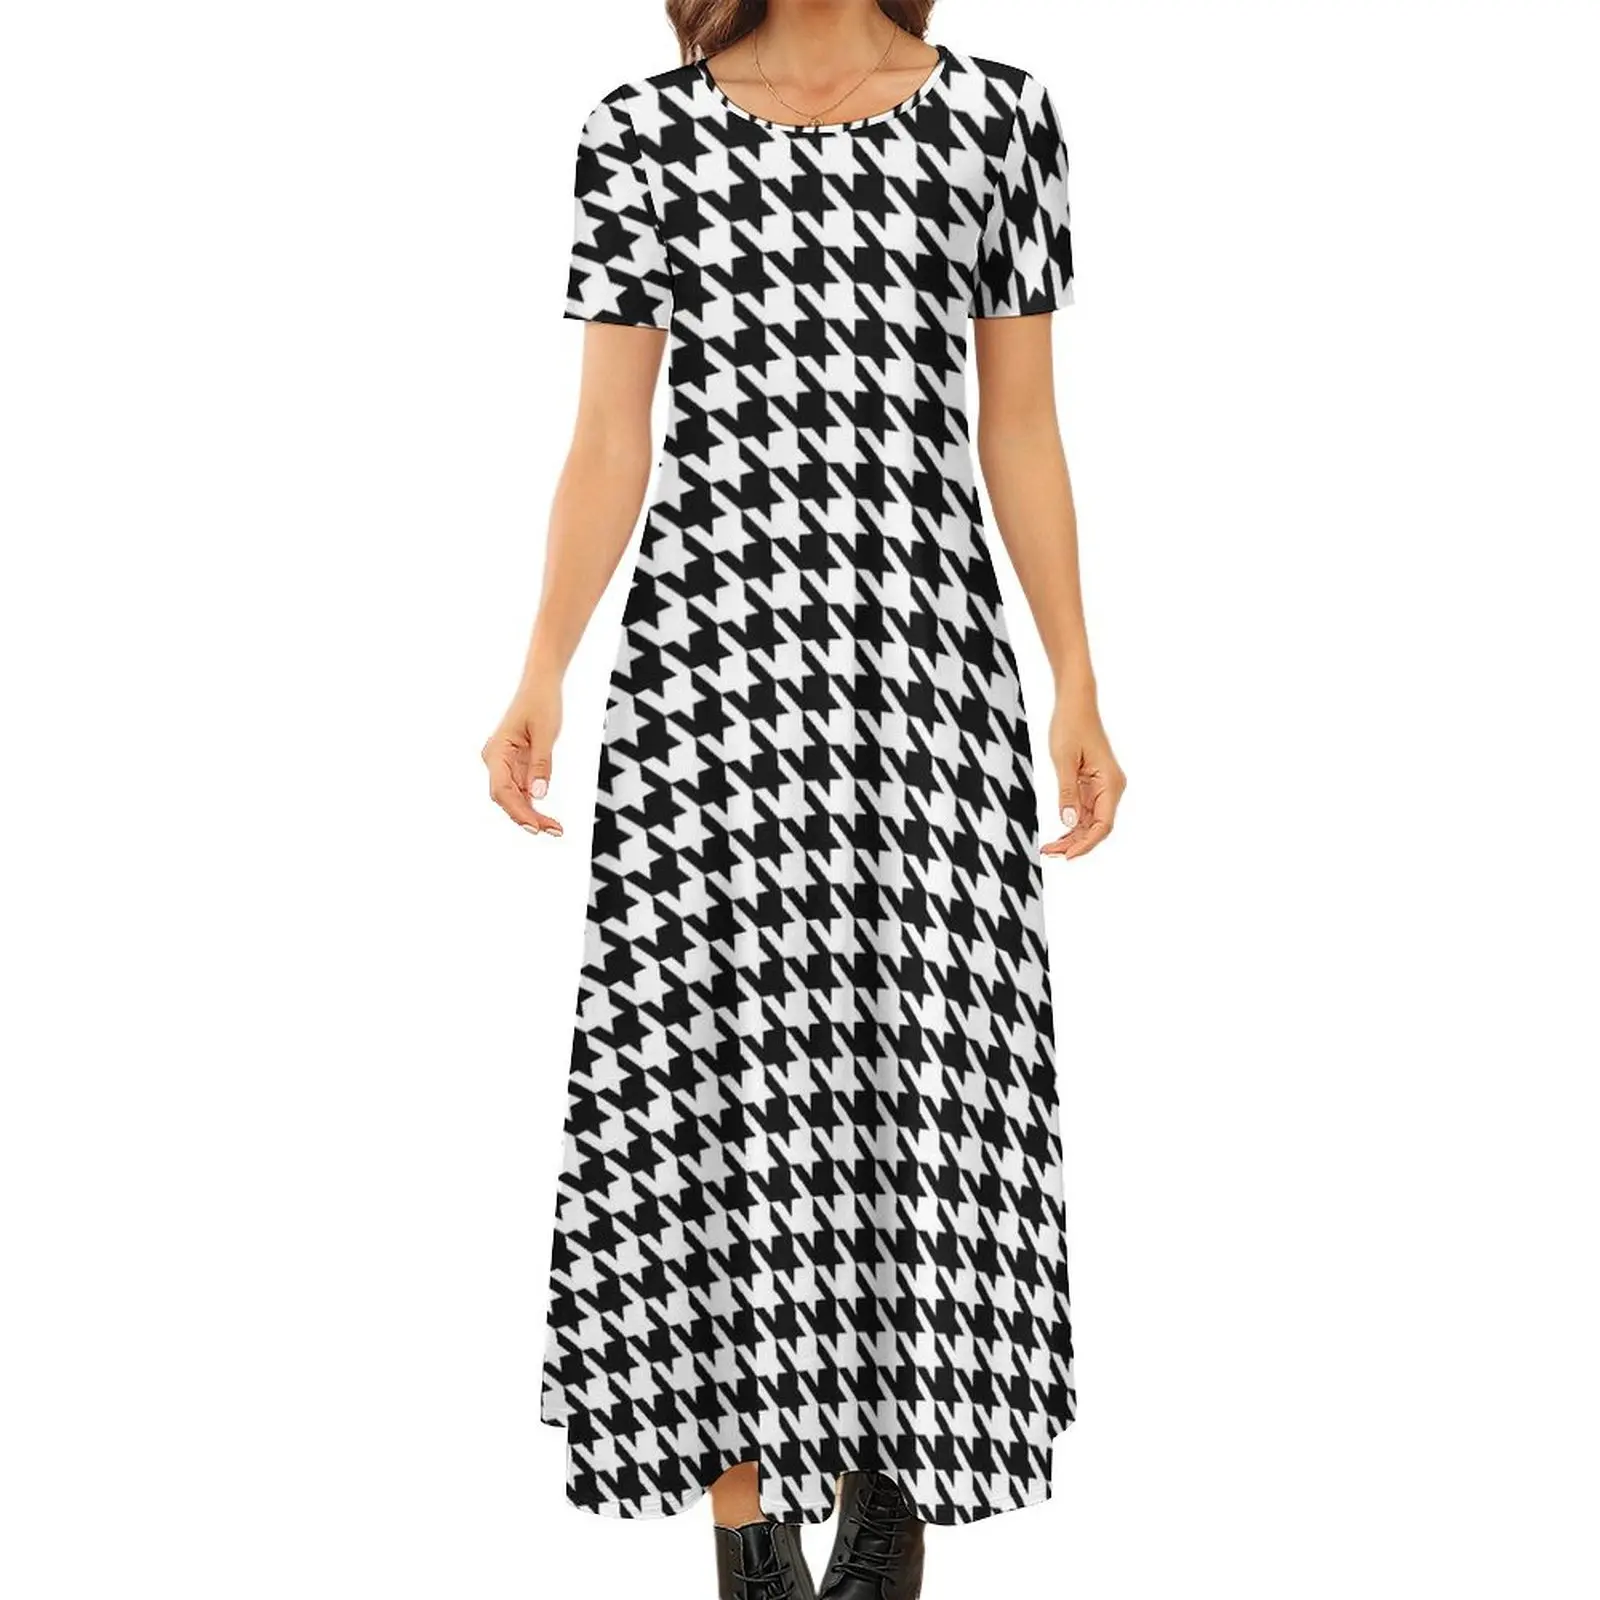 

Black White Houndstooth Dress Retro Print Party Maxi Dress Short Sleeve Aesthetic Boho Beach Long Dresses Woman Oversize Clothes